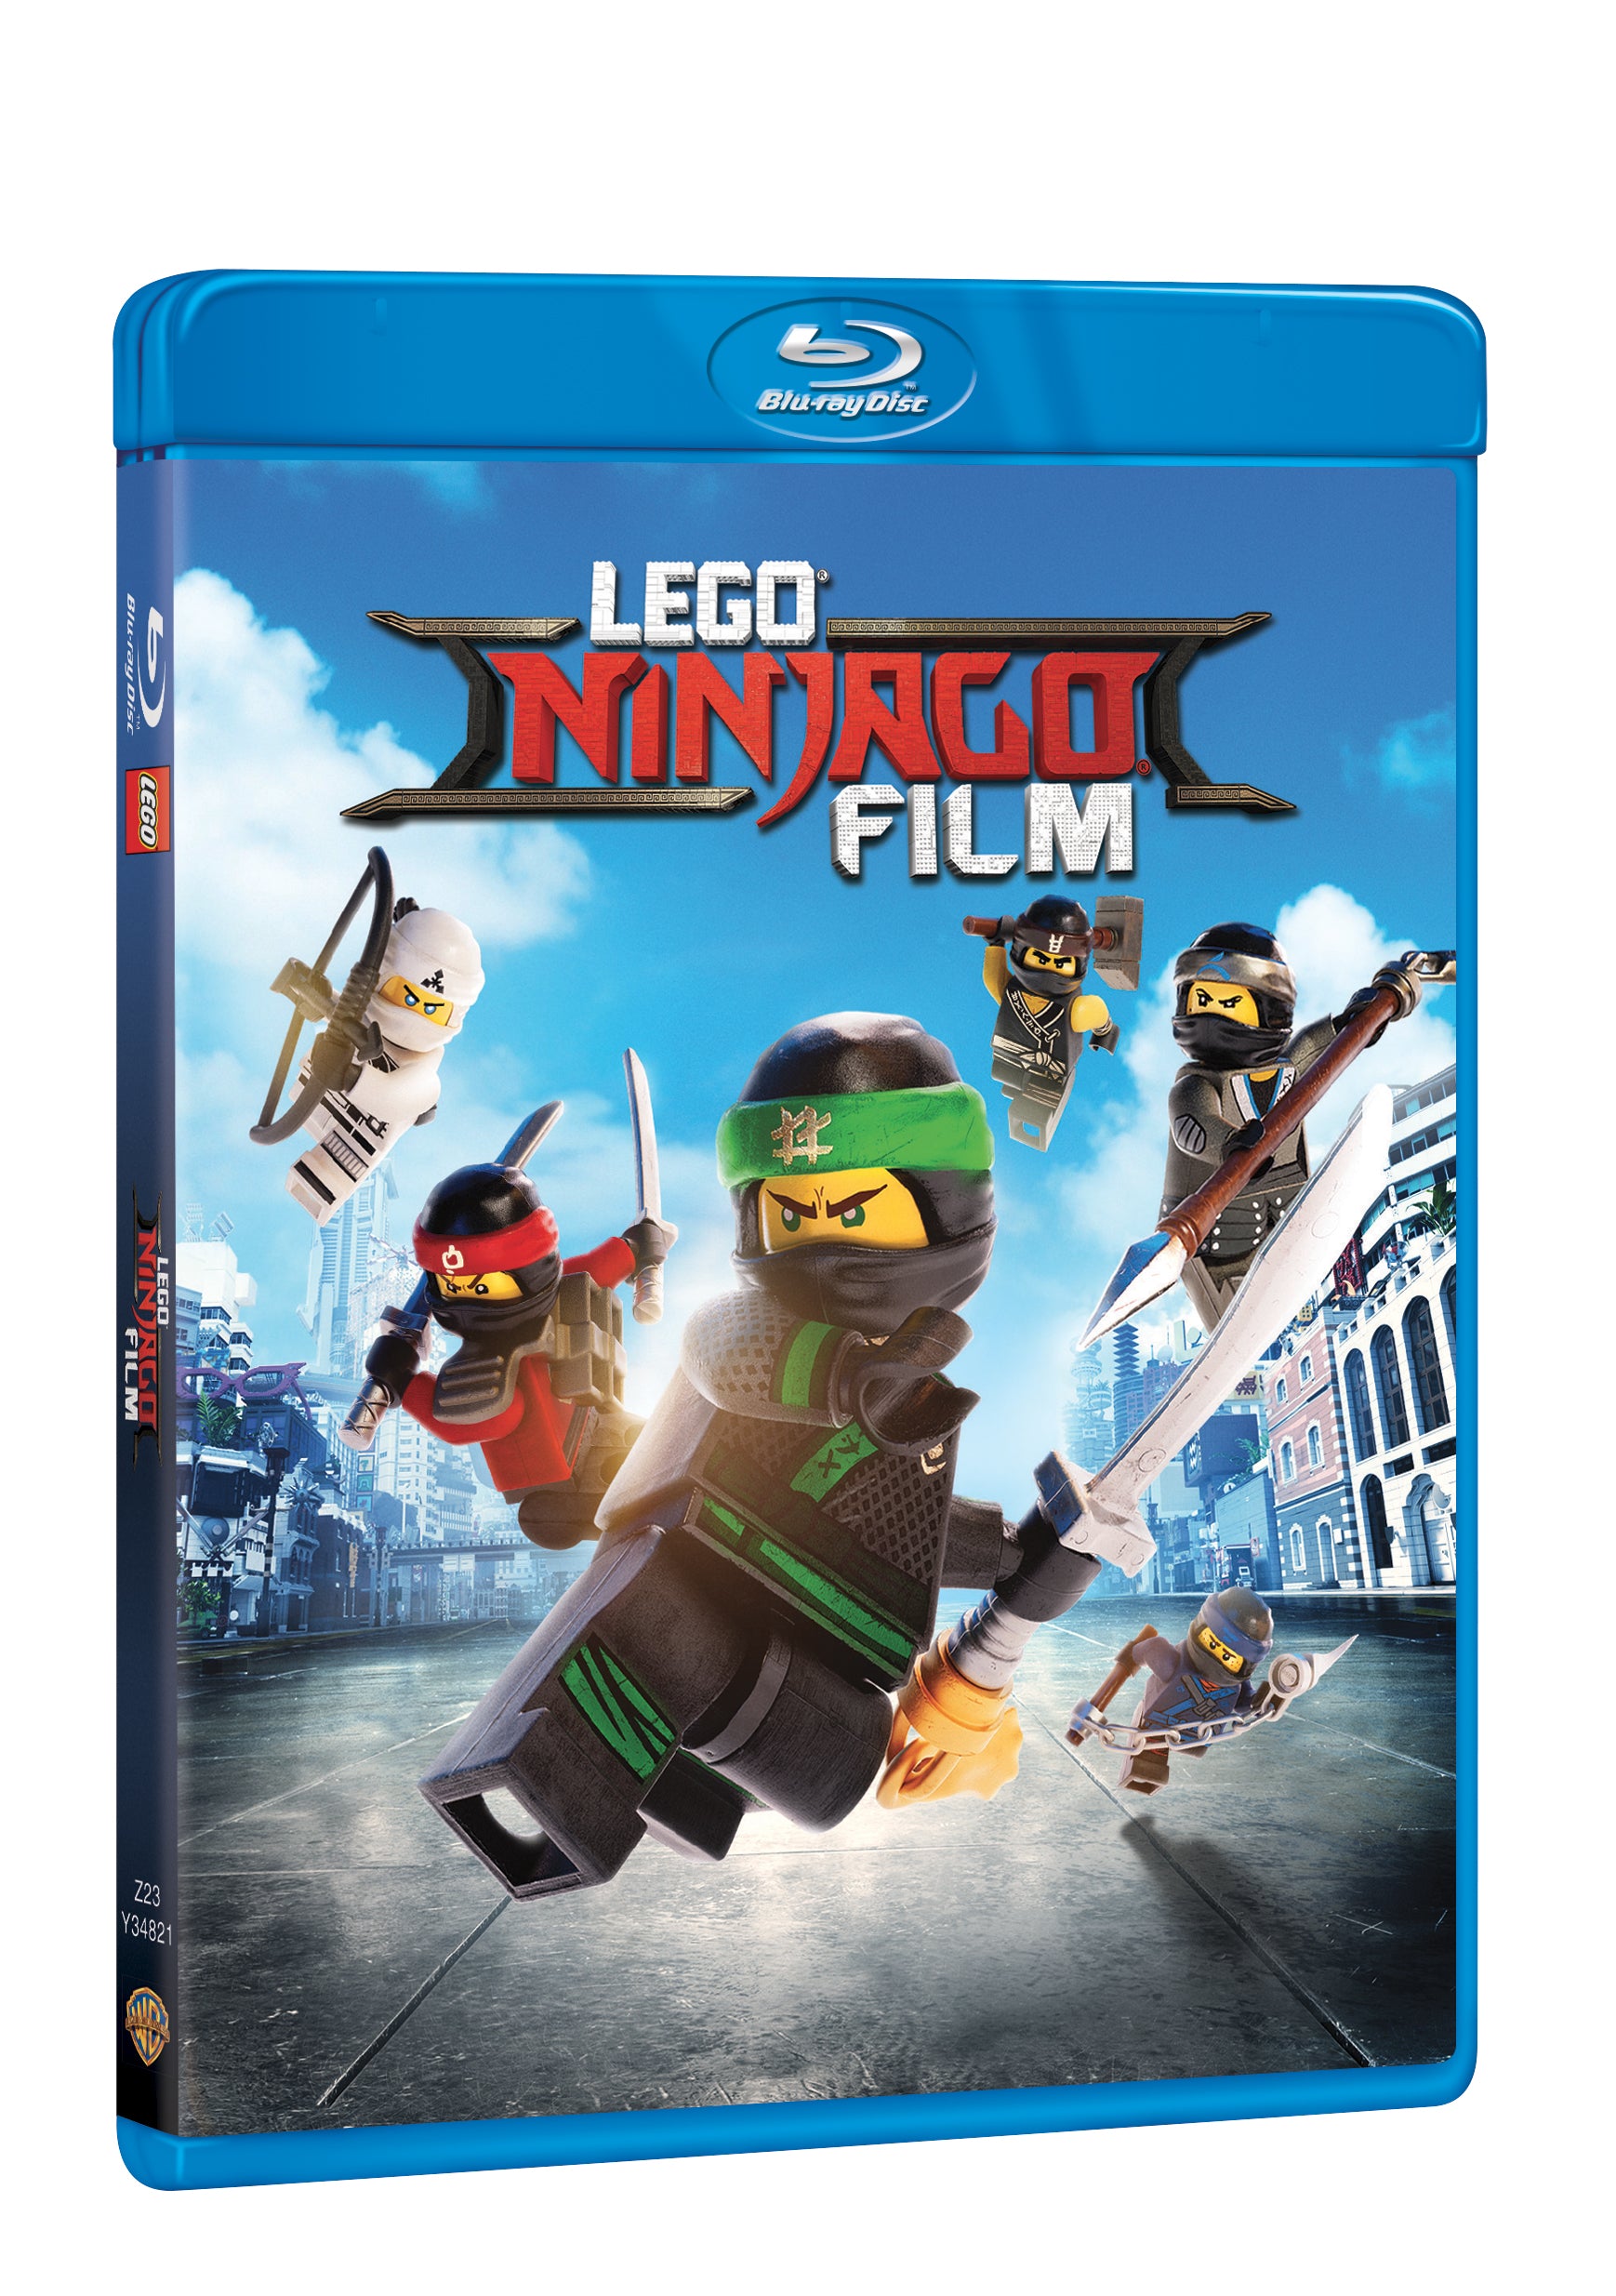 Lego Ninjago film BD / The LEGO Ninjago® Movie - Czech version